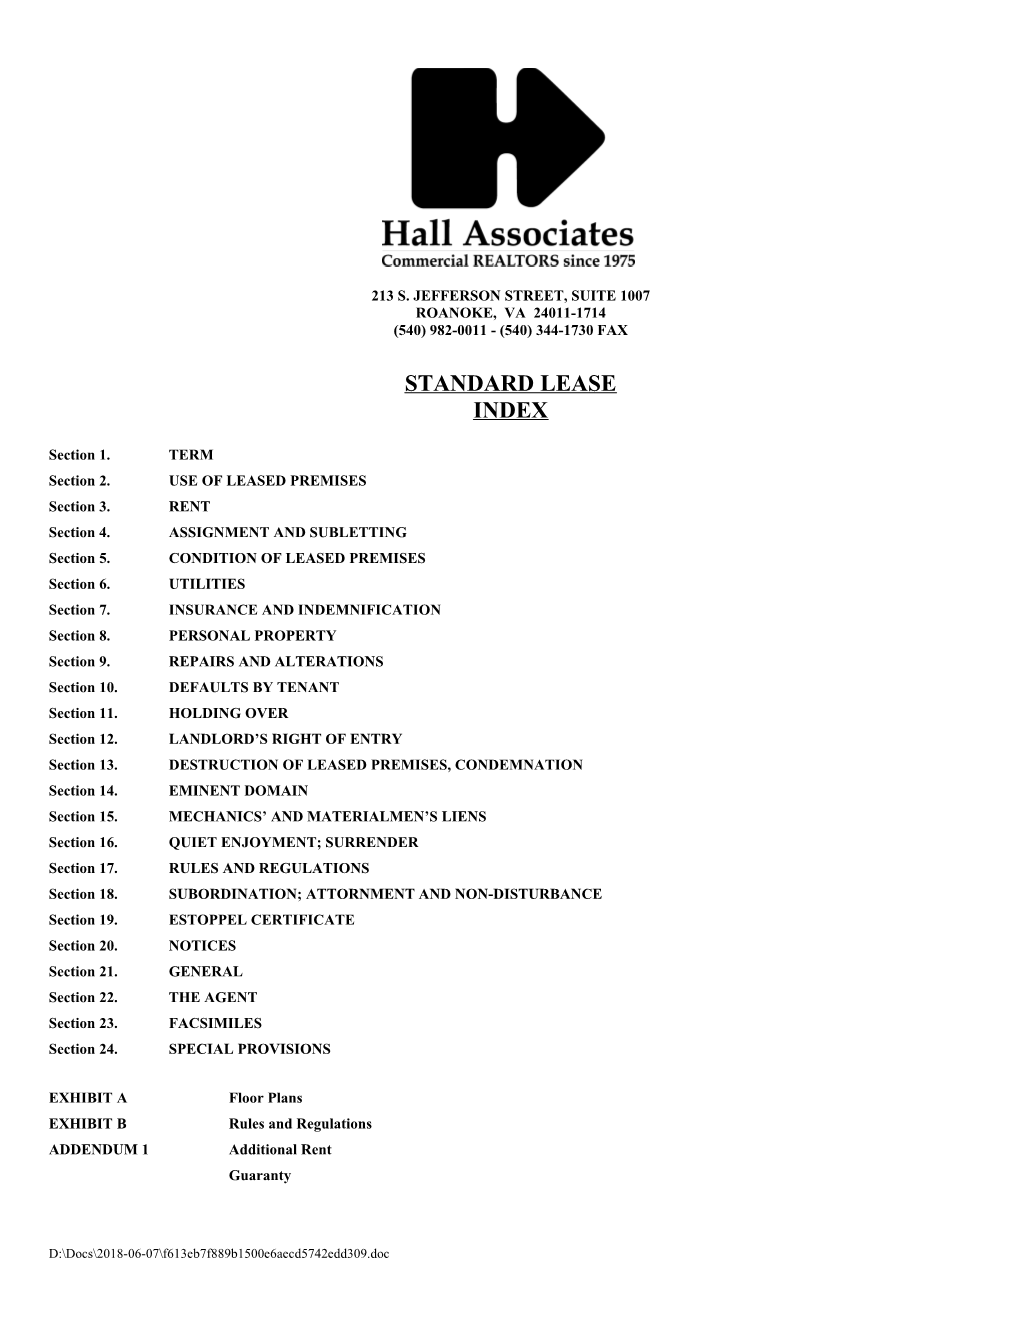 Hall Associates, Inc